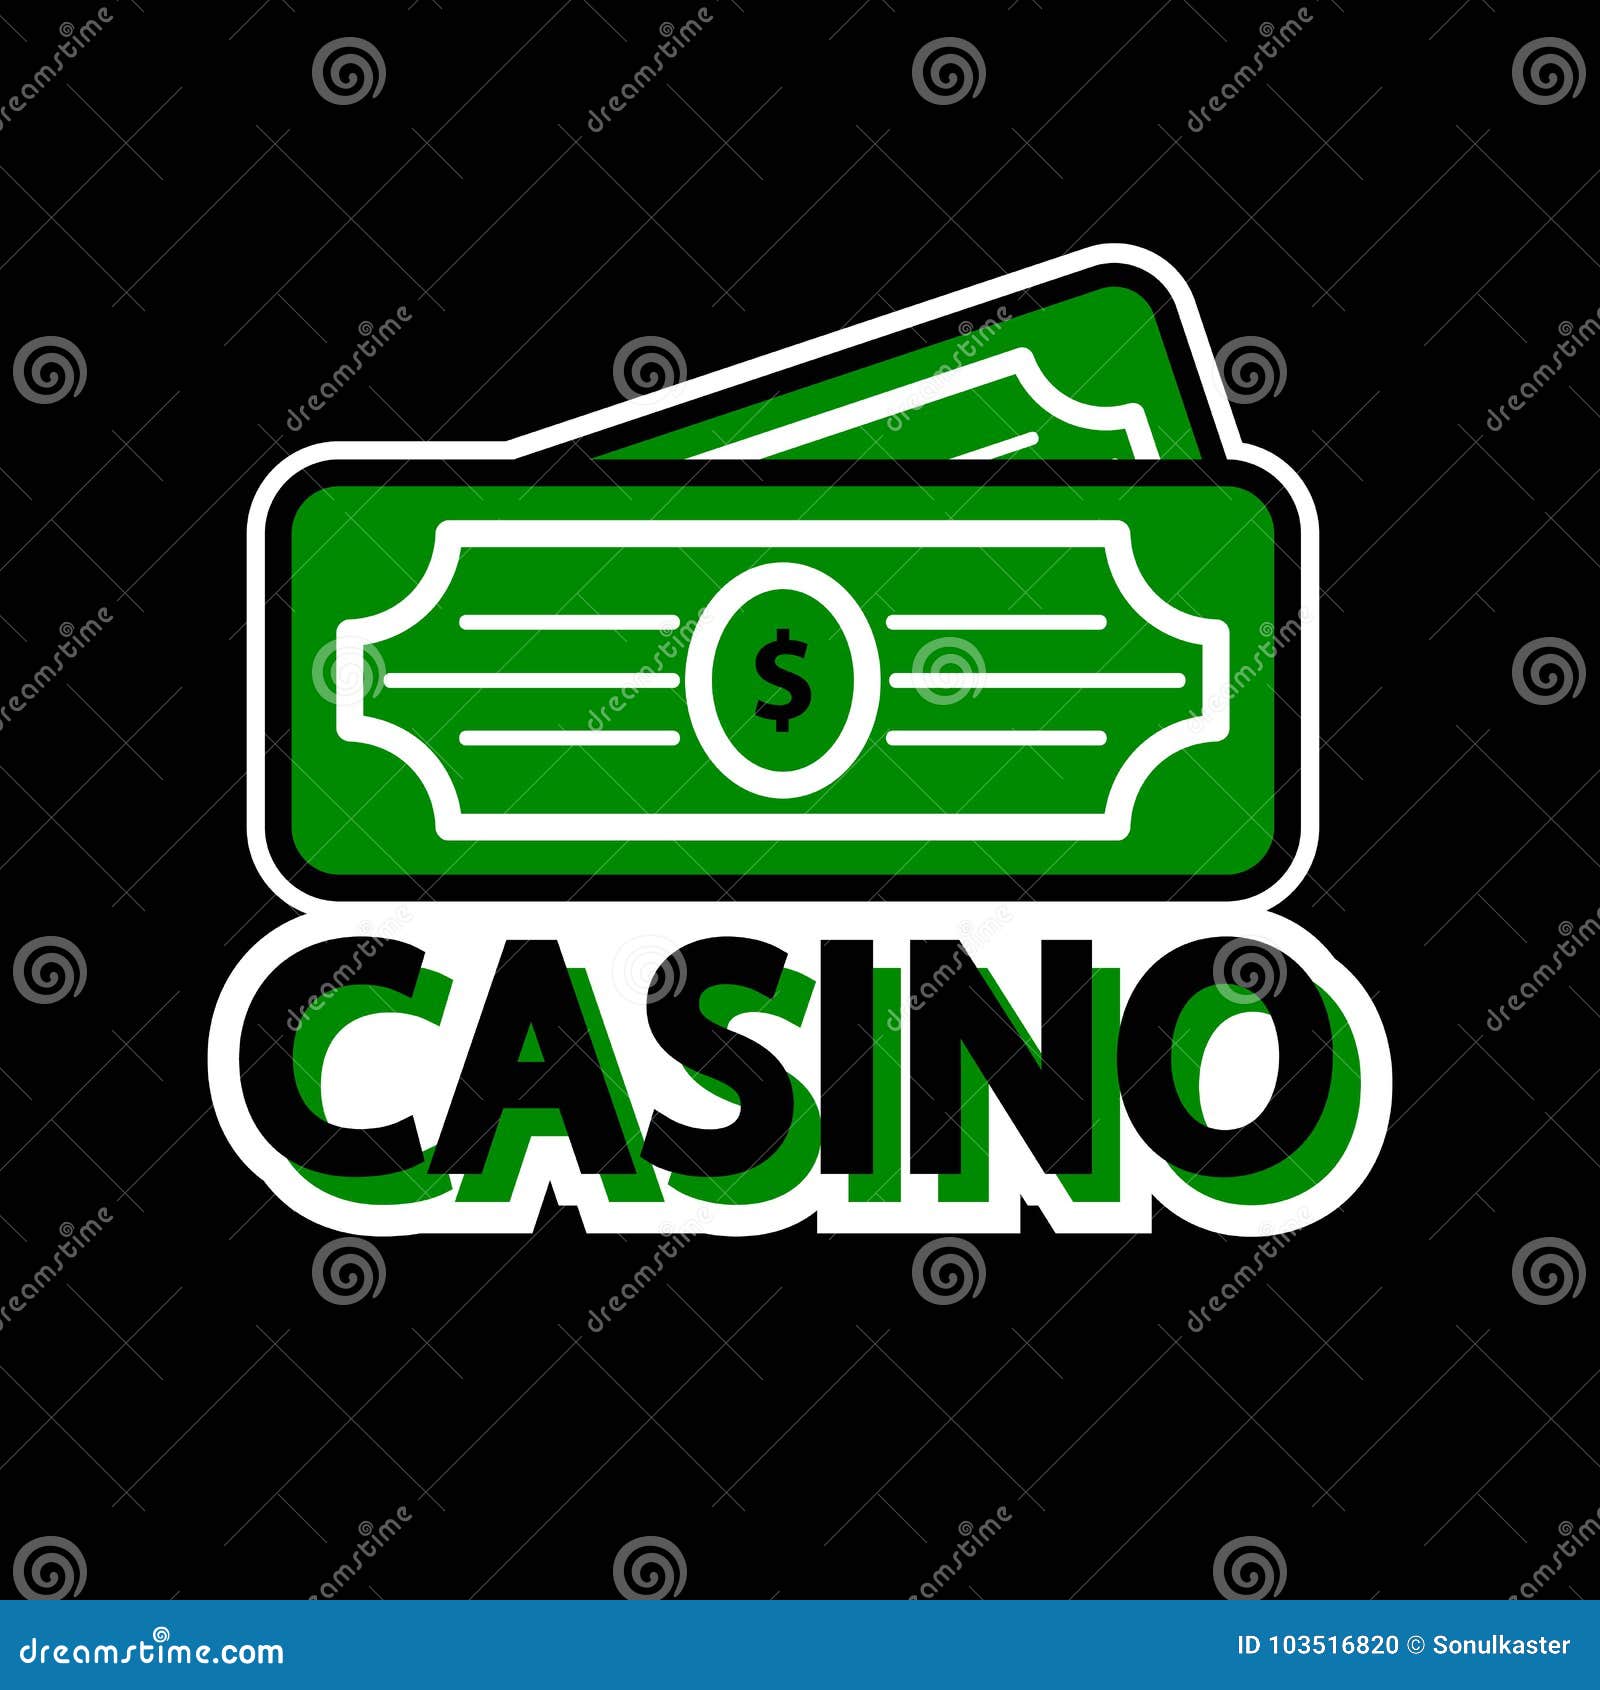 Lucky Dollar Casino